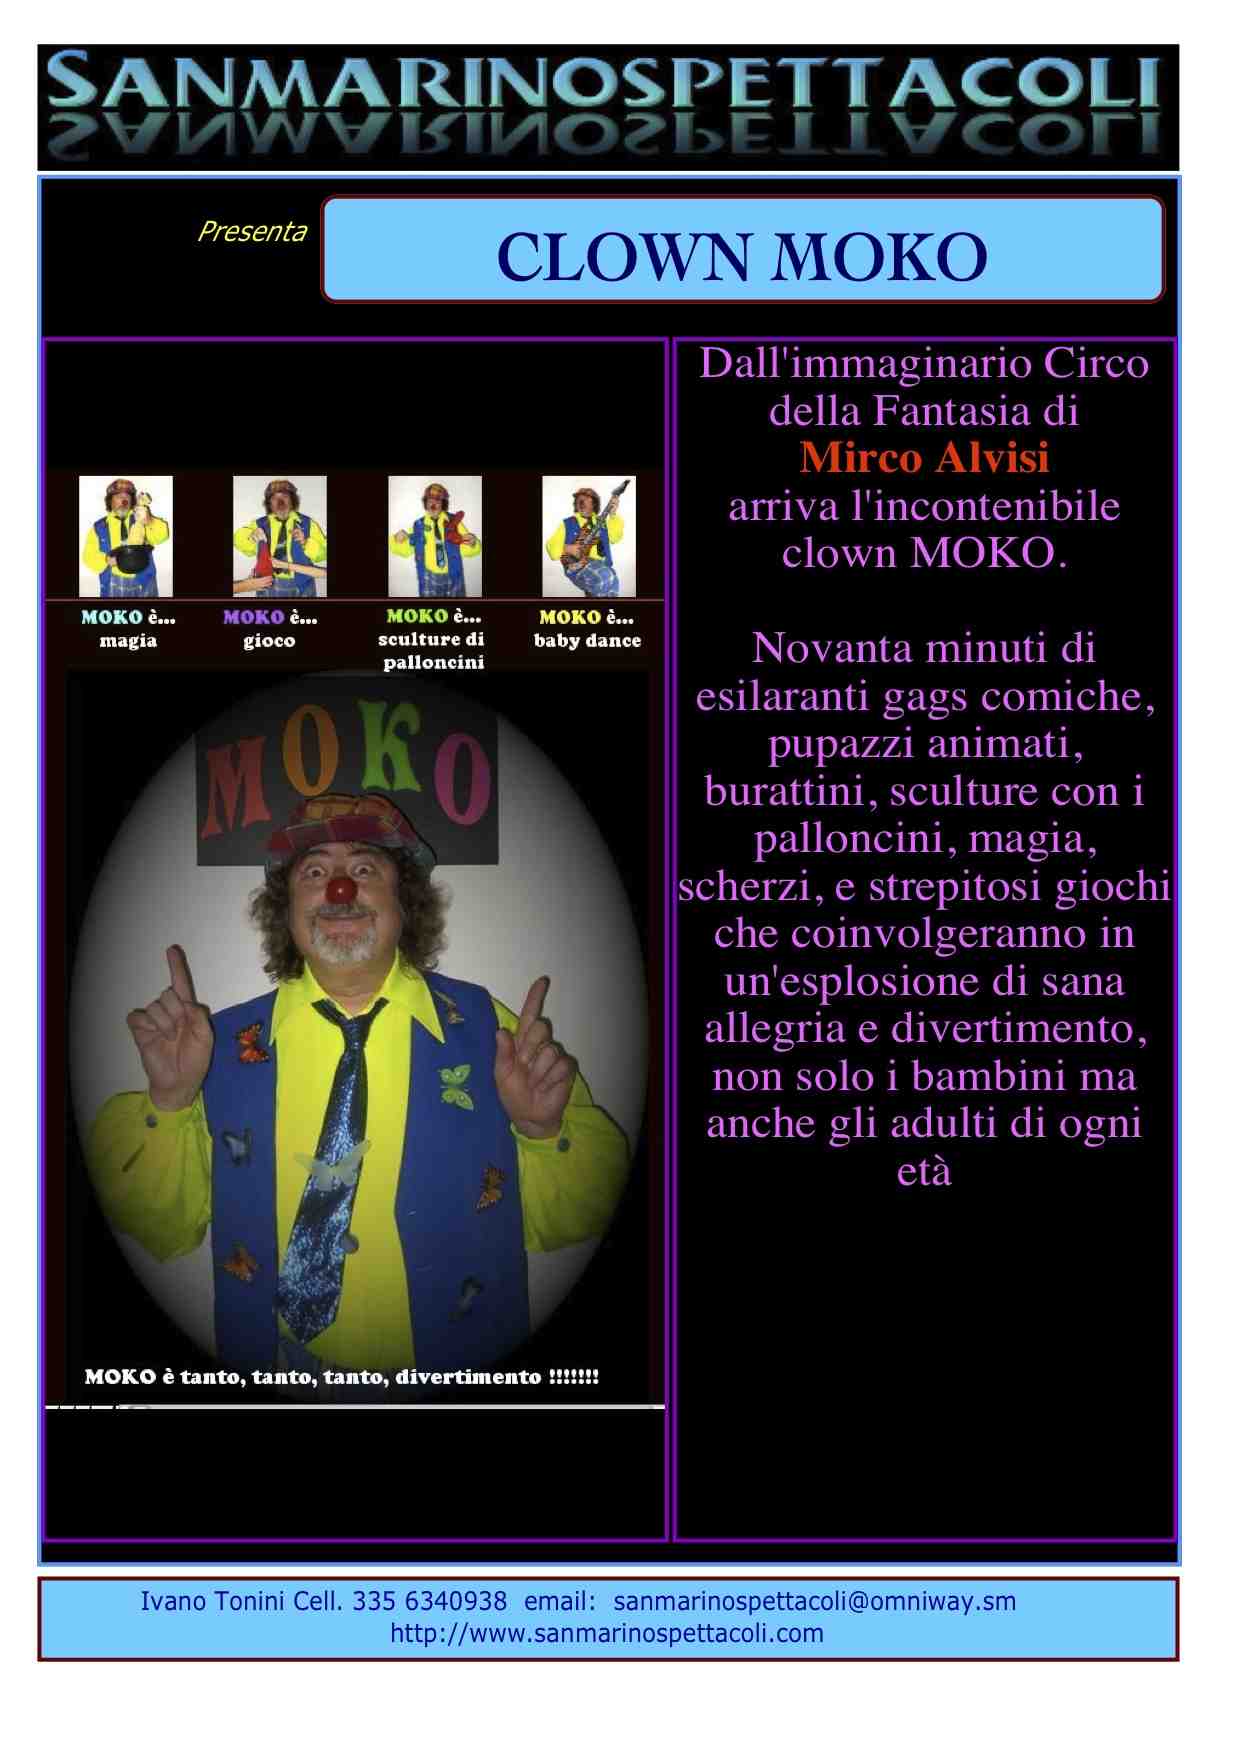 Clown Moko